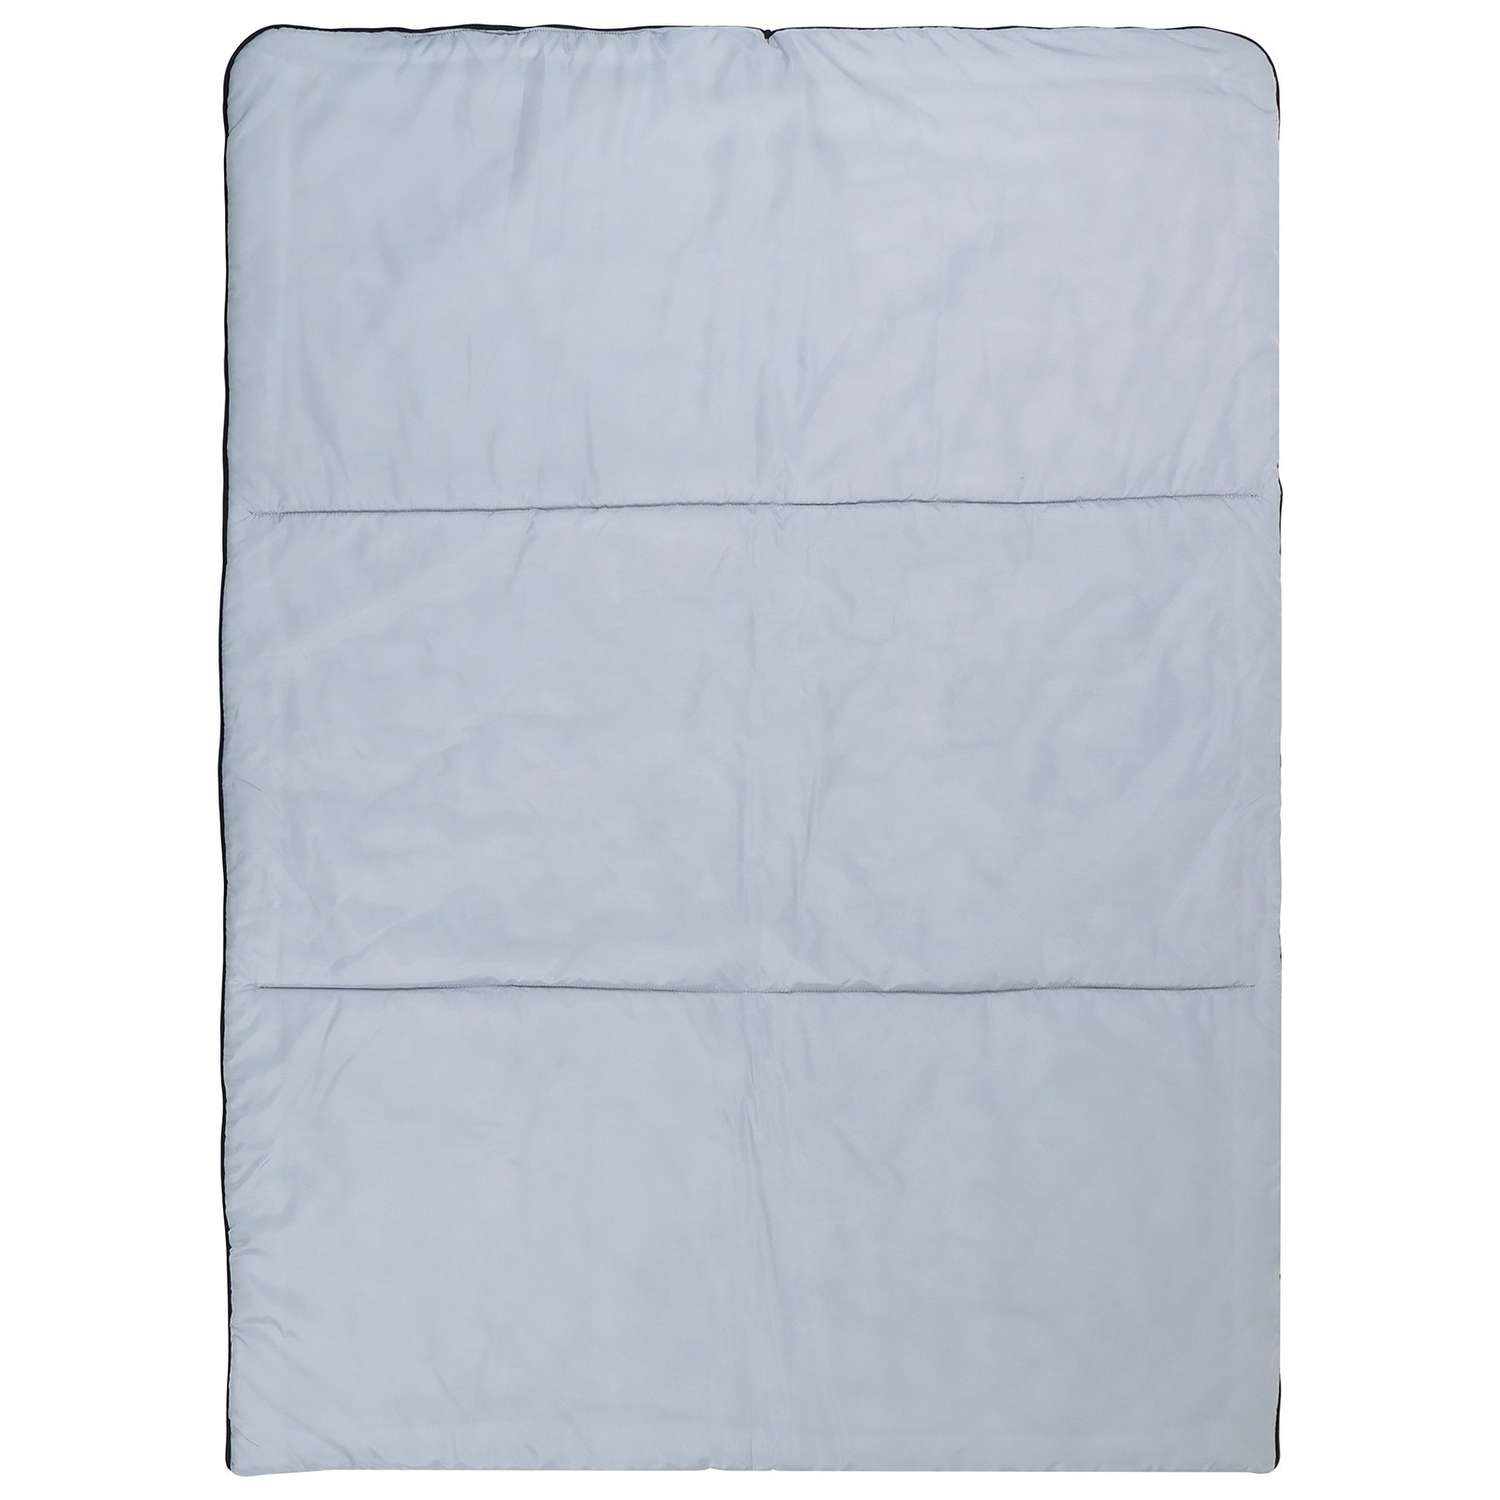 Спальник-одеяло Maclay 200 х 75 см до -5 °С - фото 9